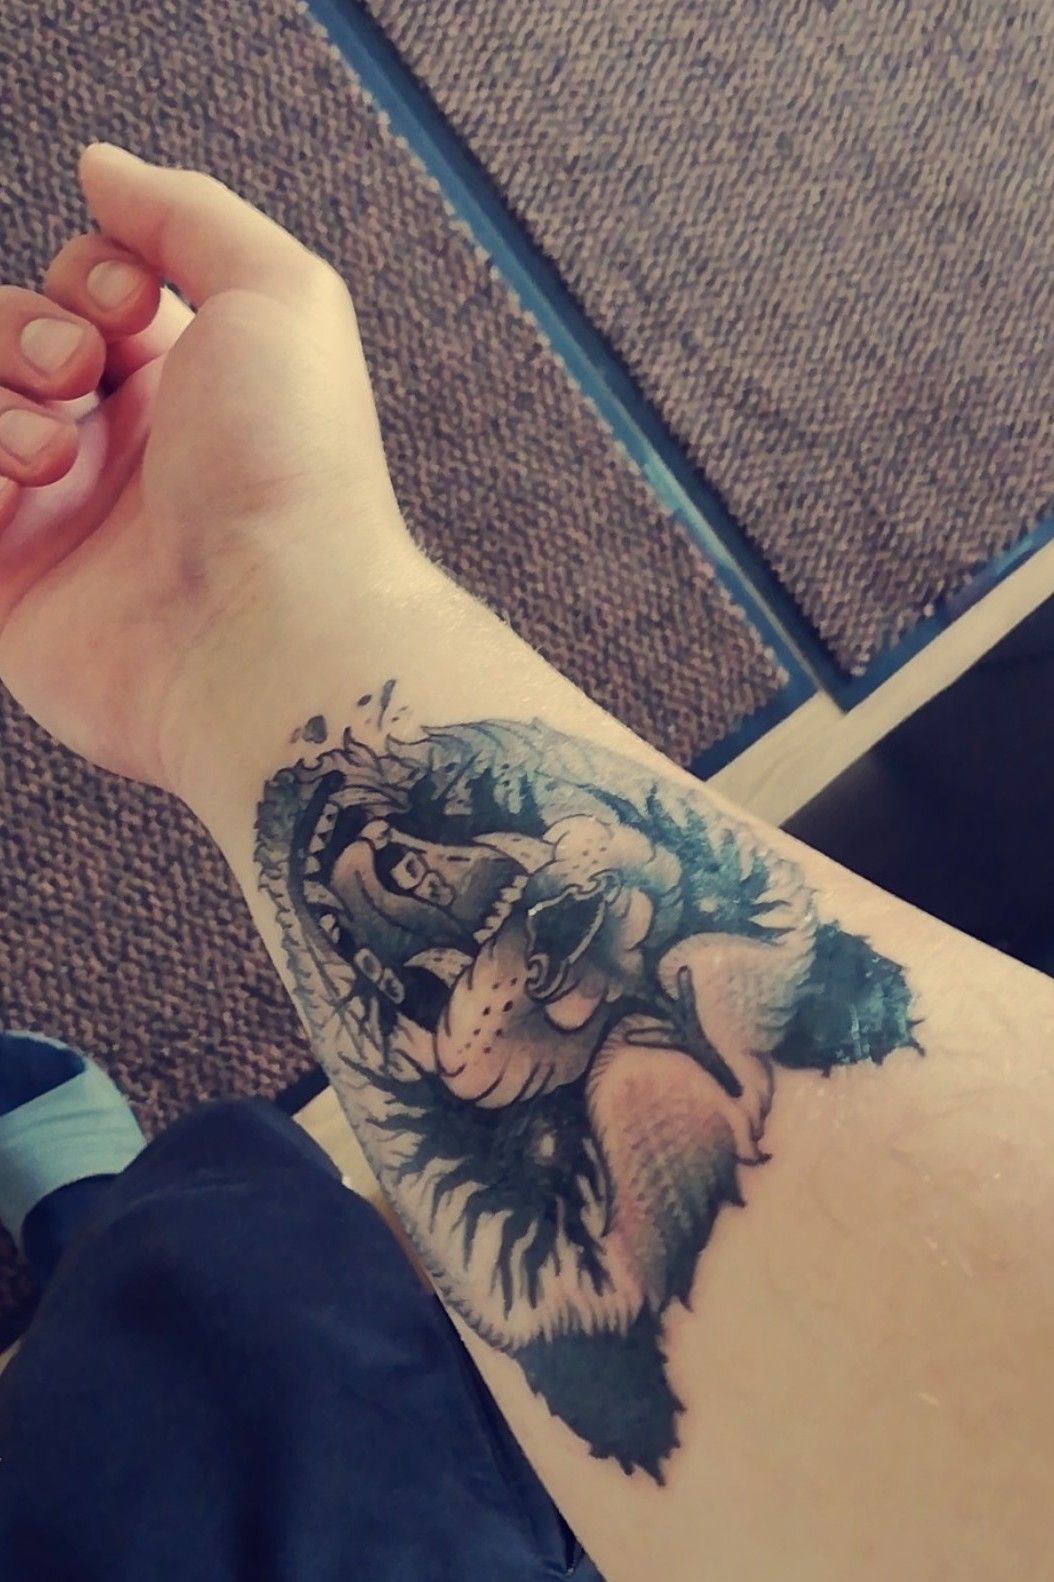 Tattoo uploaded by Ricardo Van t Hof  Angry panda on lower arm  Tattoodo